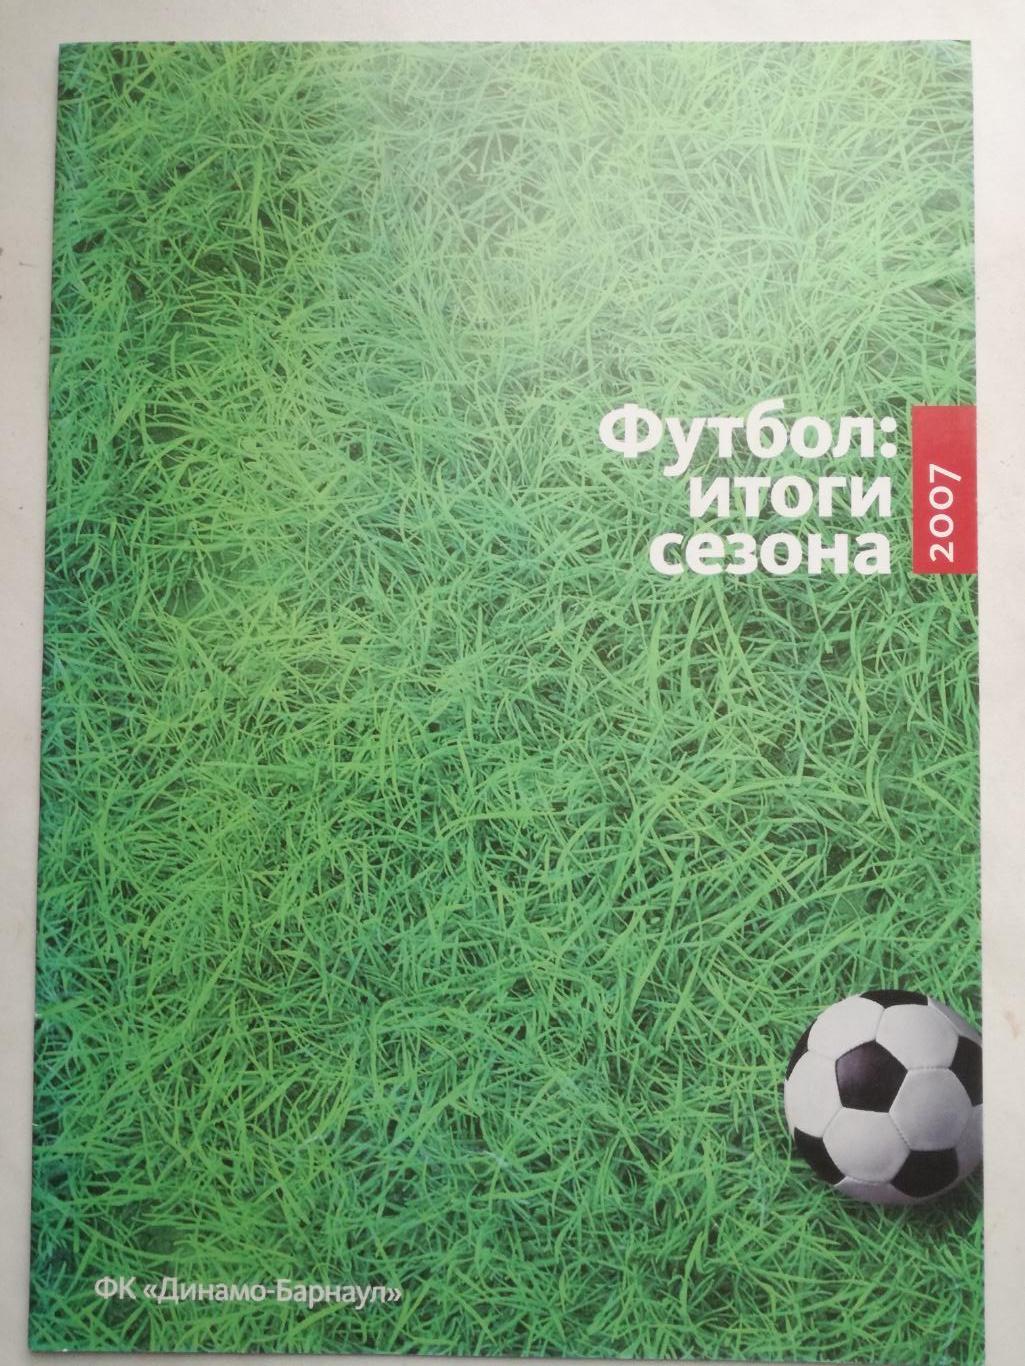 ФК Динамо Барнаул. Футбол: итоги сезона 2007